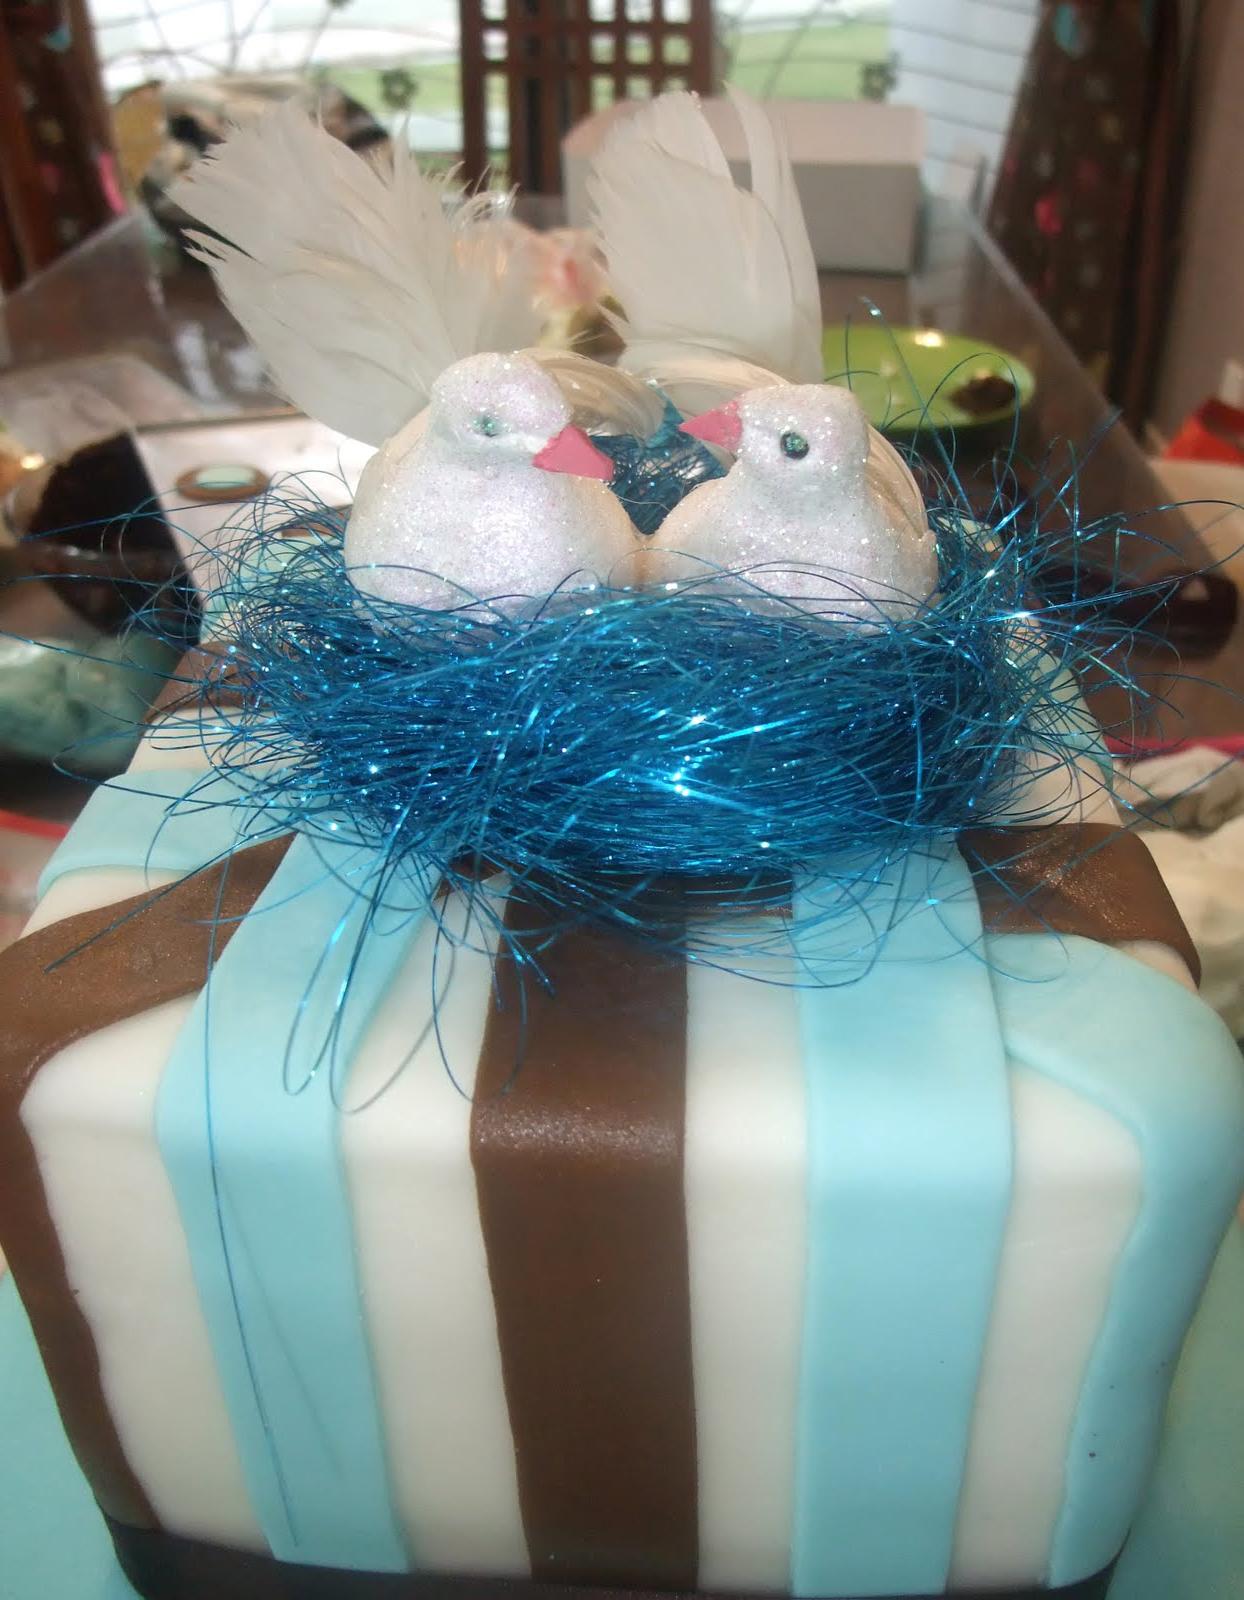 white and blue wedding cake